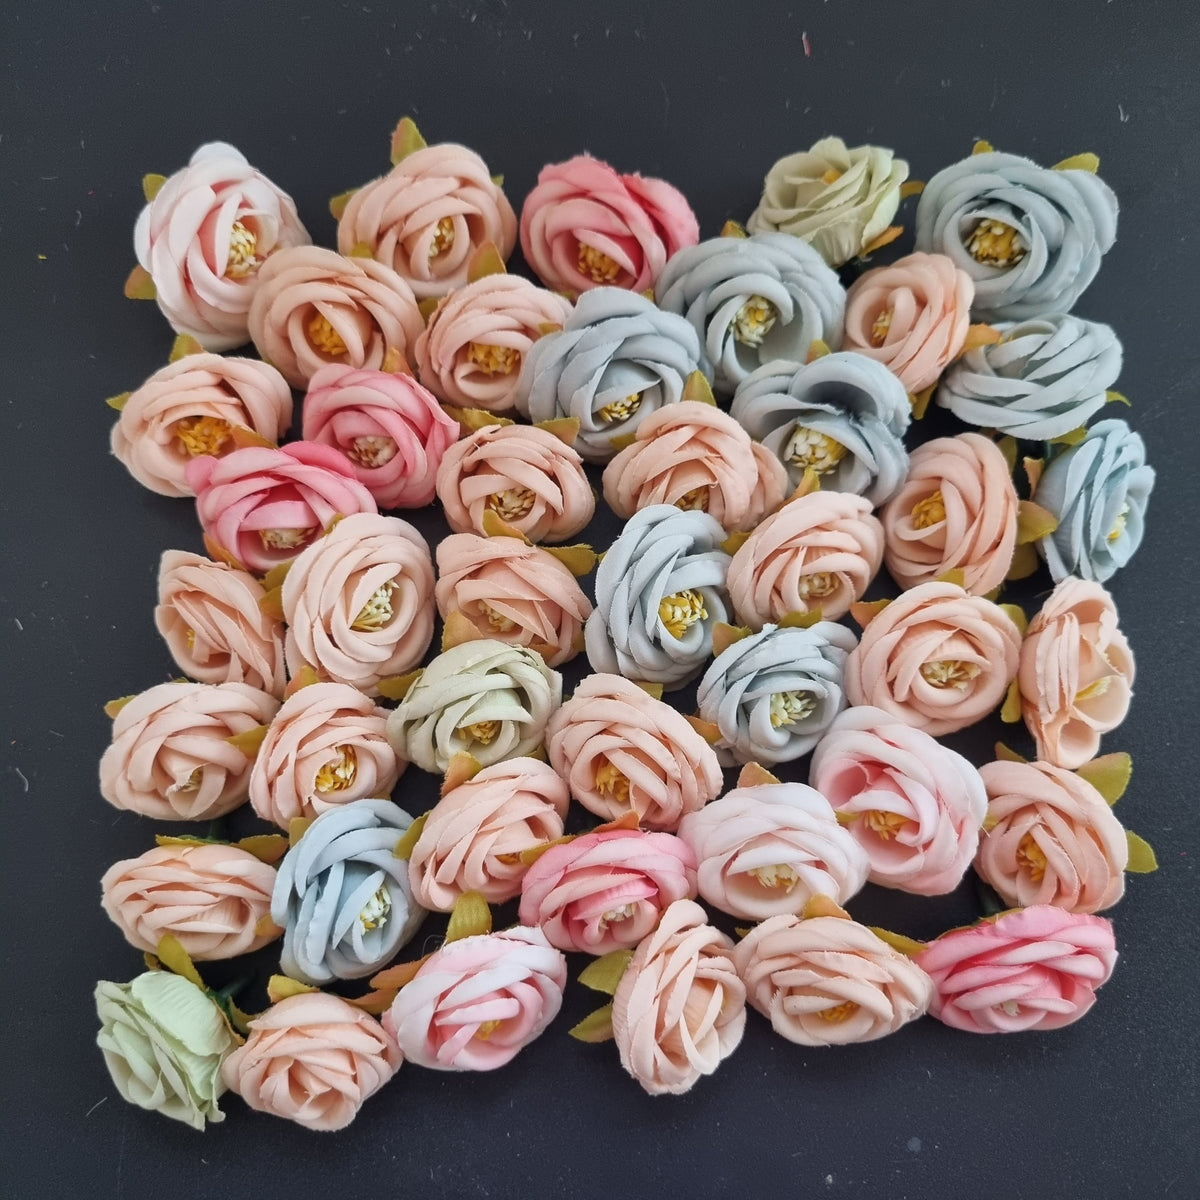 50 smukke roser - Hårpynt med blomster og perler til bryllup, konfirmation og fest